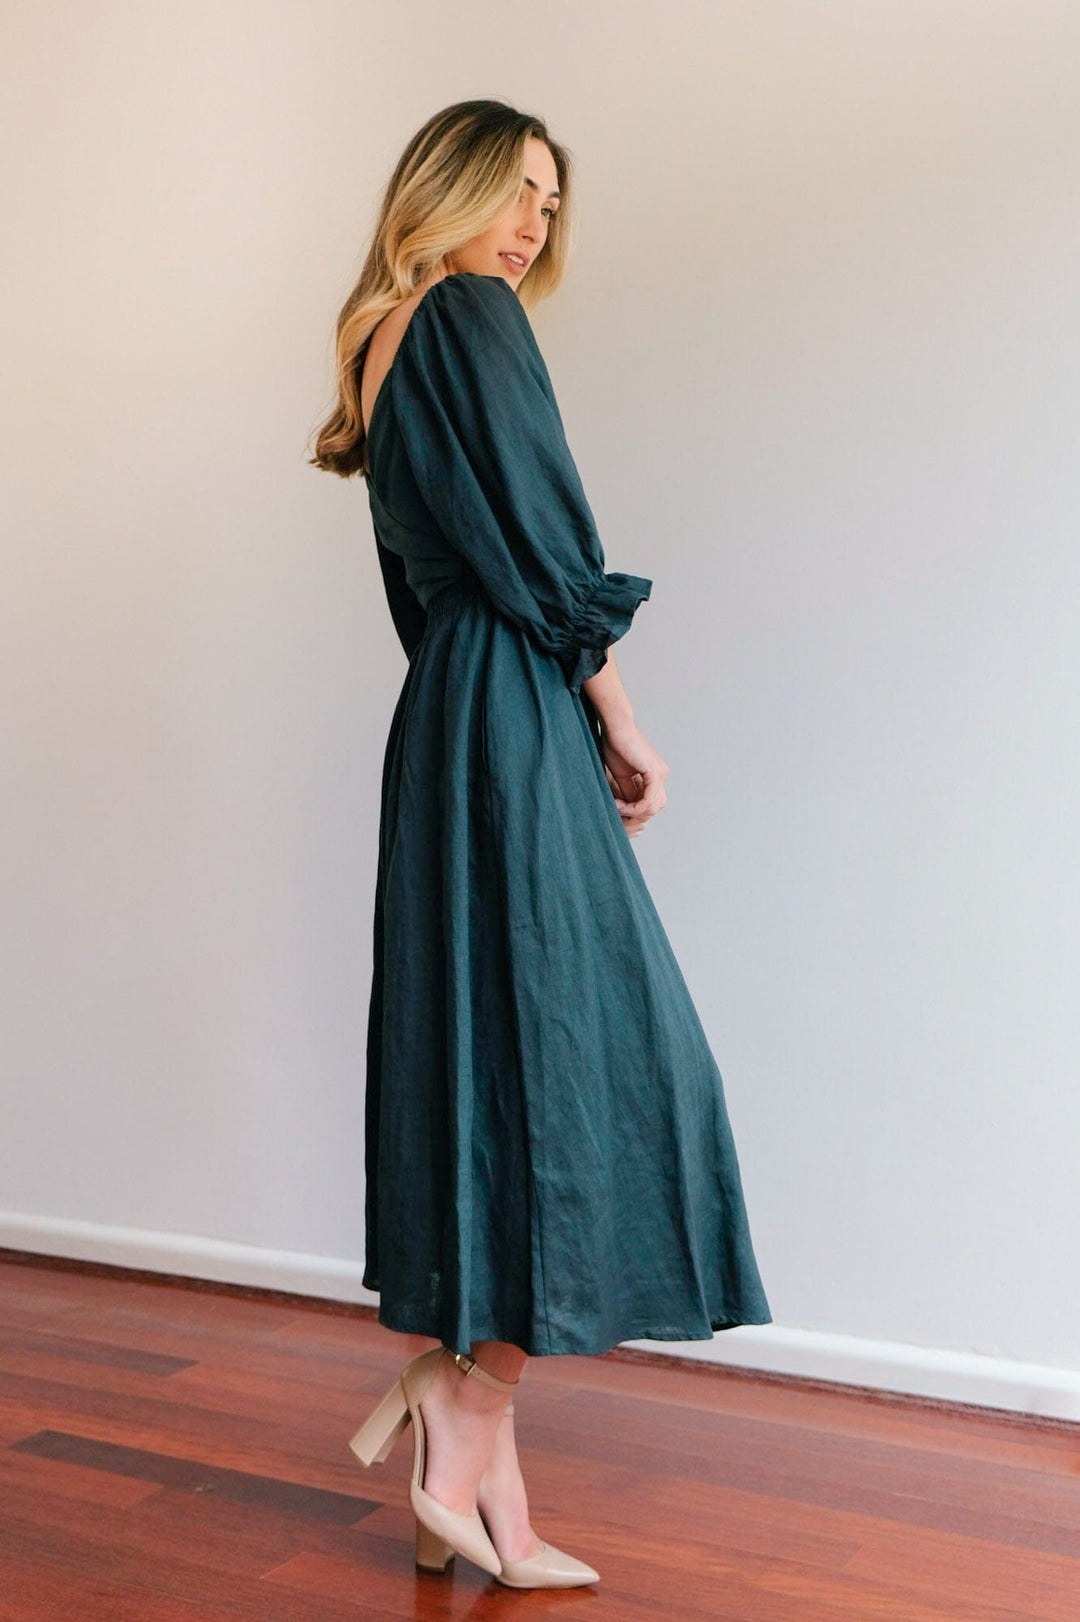 Charlotte Emerald Dress